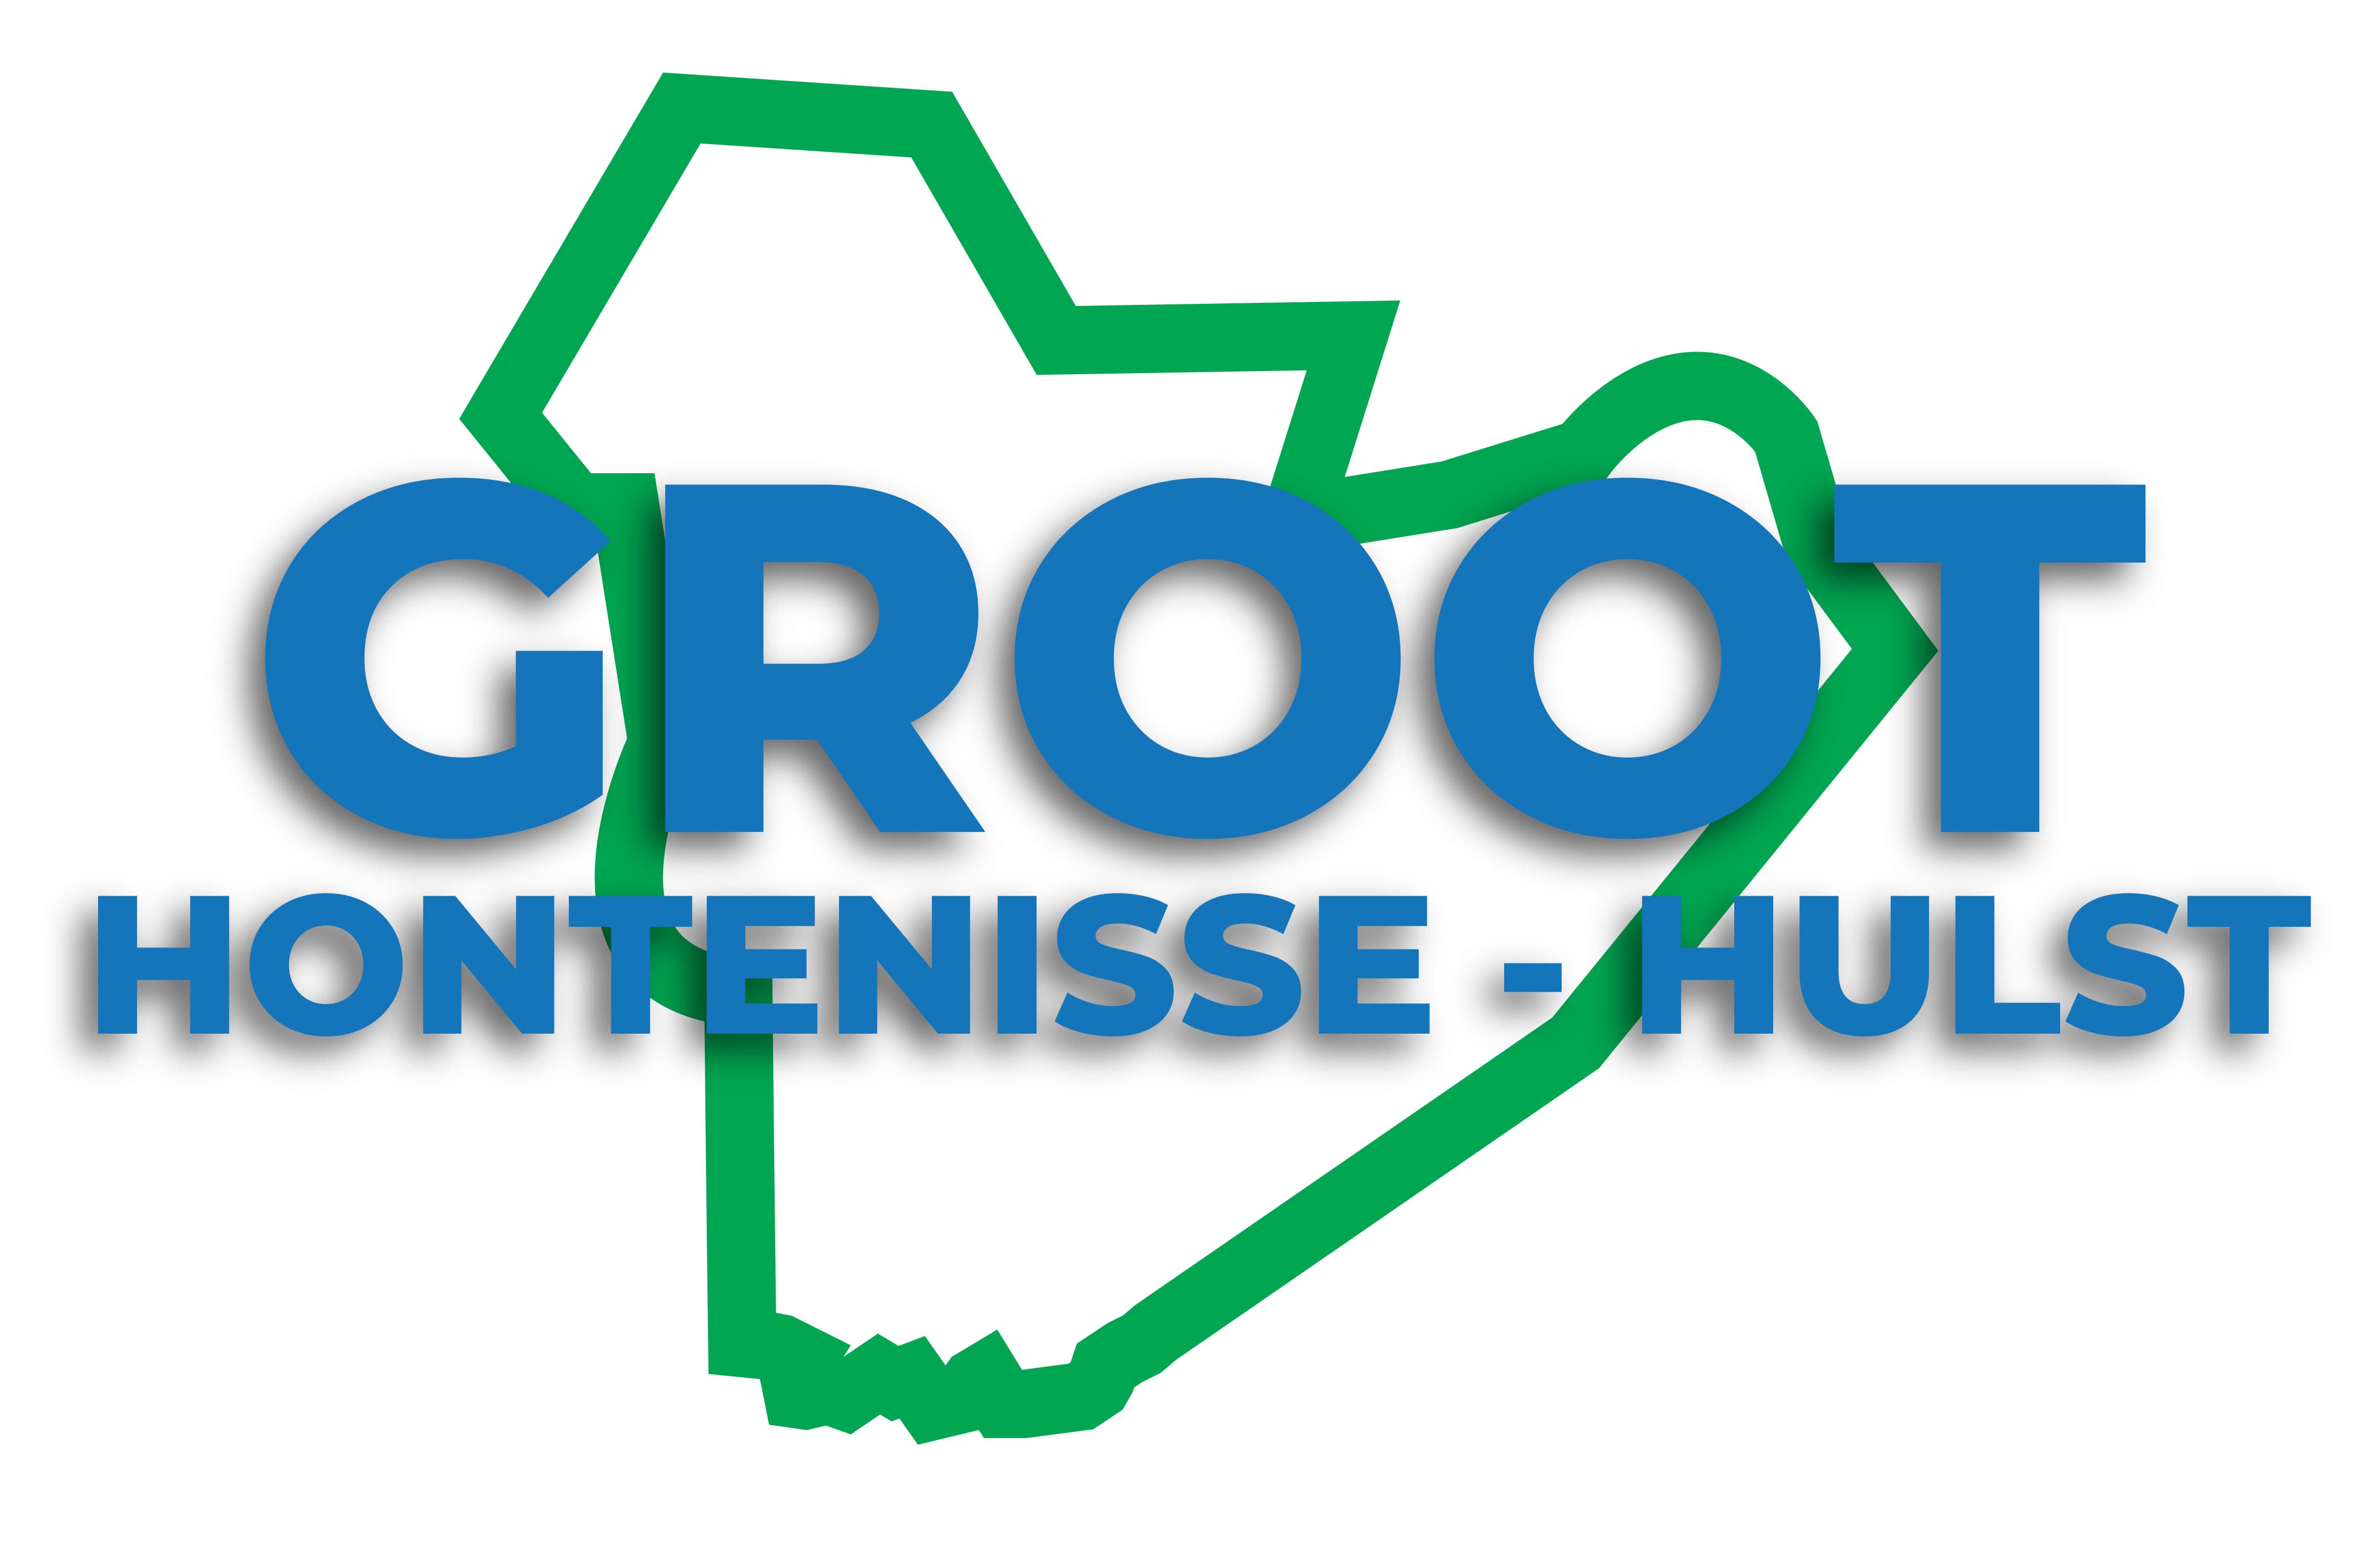 (c) Groothontenisse.nl